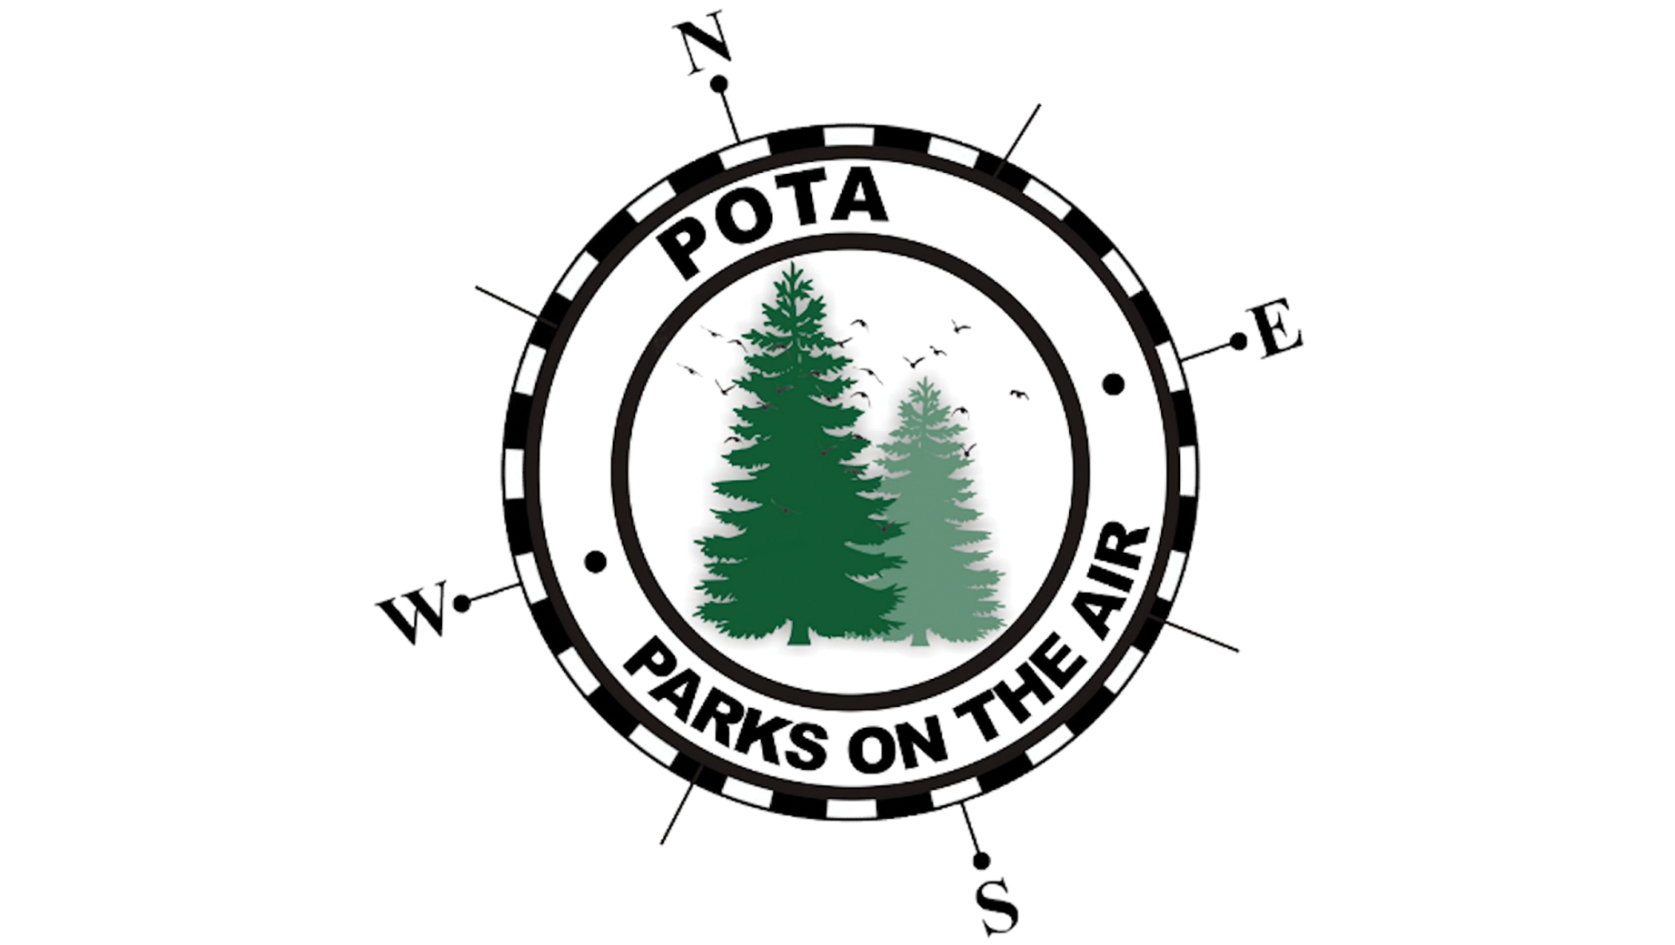 Event: POTA in the park event